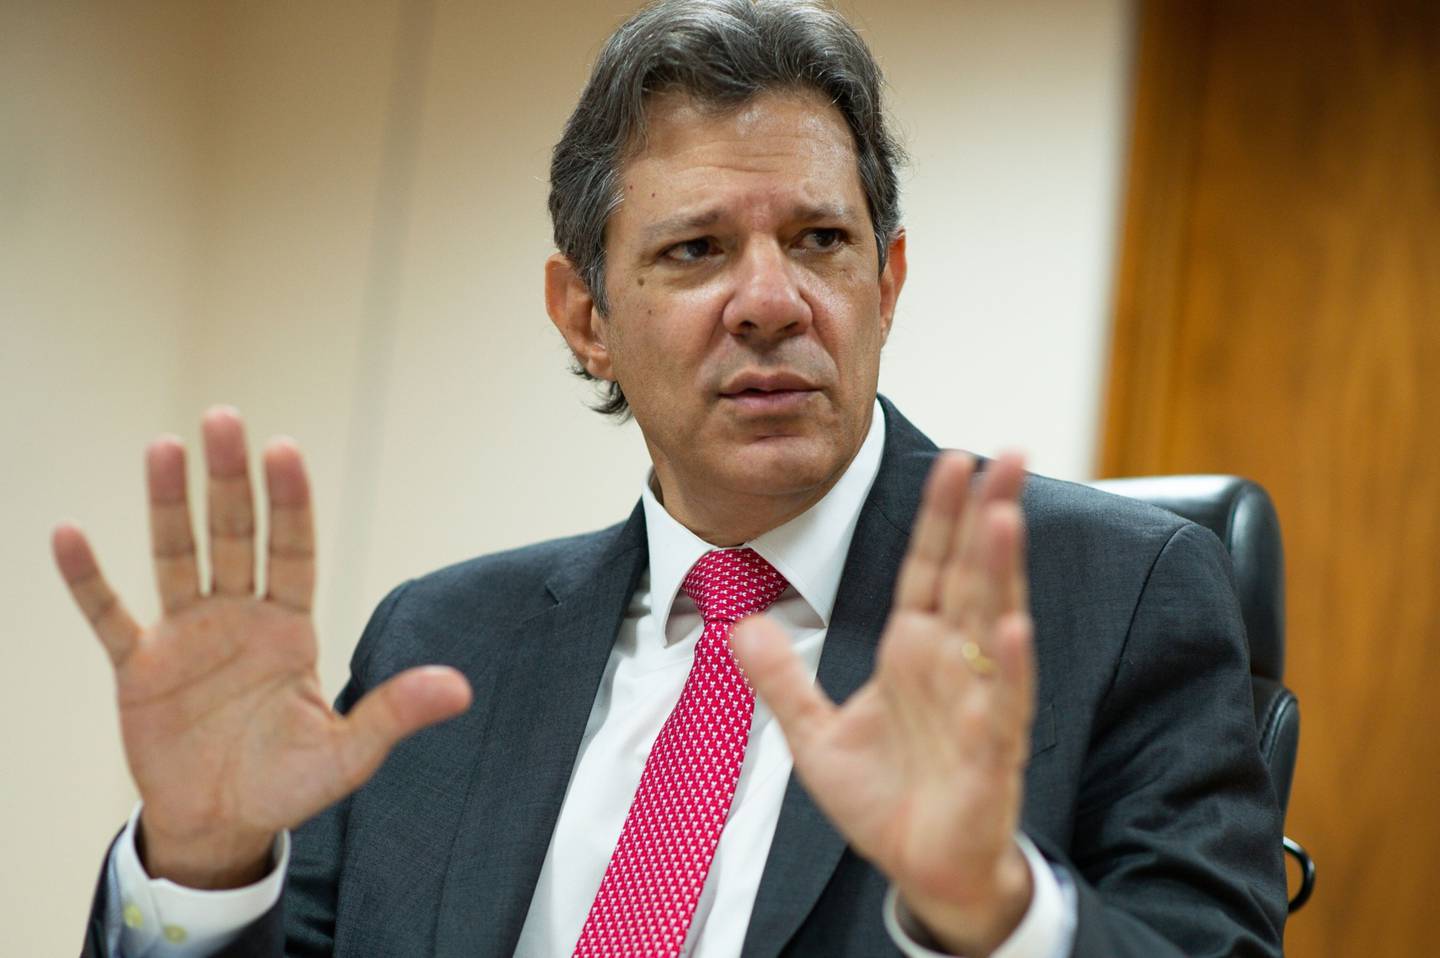 Fernando Haddad, Brazil's finance minister, during an interview in Brasilia.